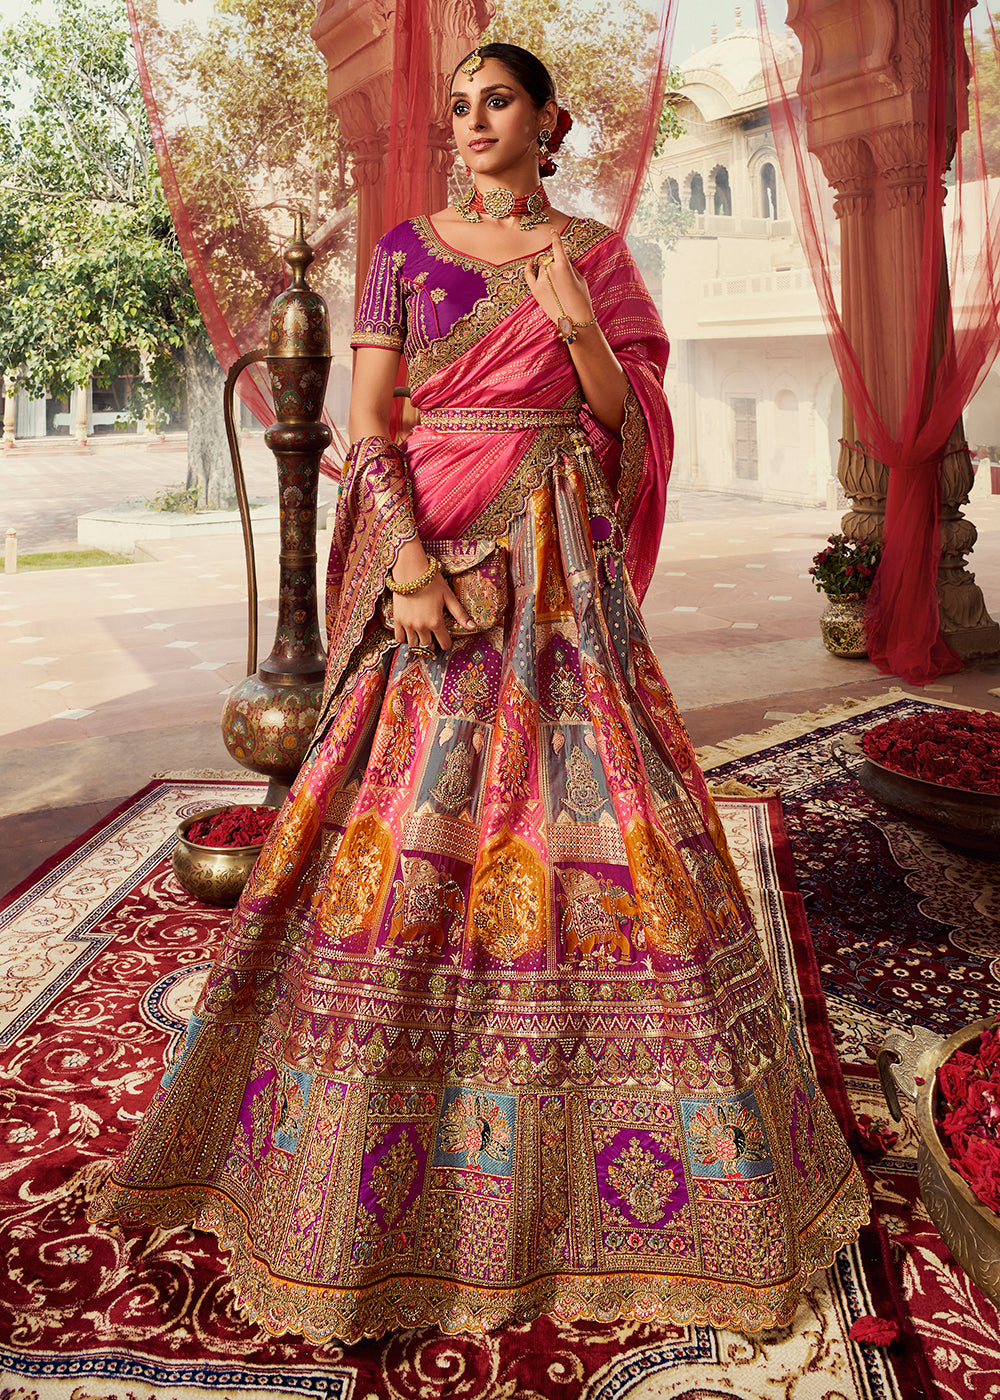 Buy Now Royal Multicolor Plum Embroidered Bridal Lehenga Choli Online in USA, UK, Canada & Worldwide at Empress Clothing.